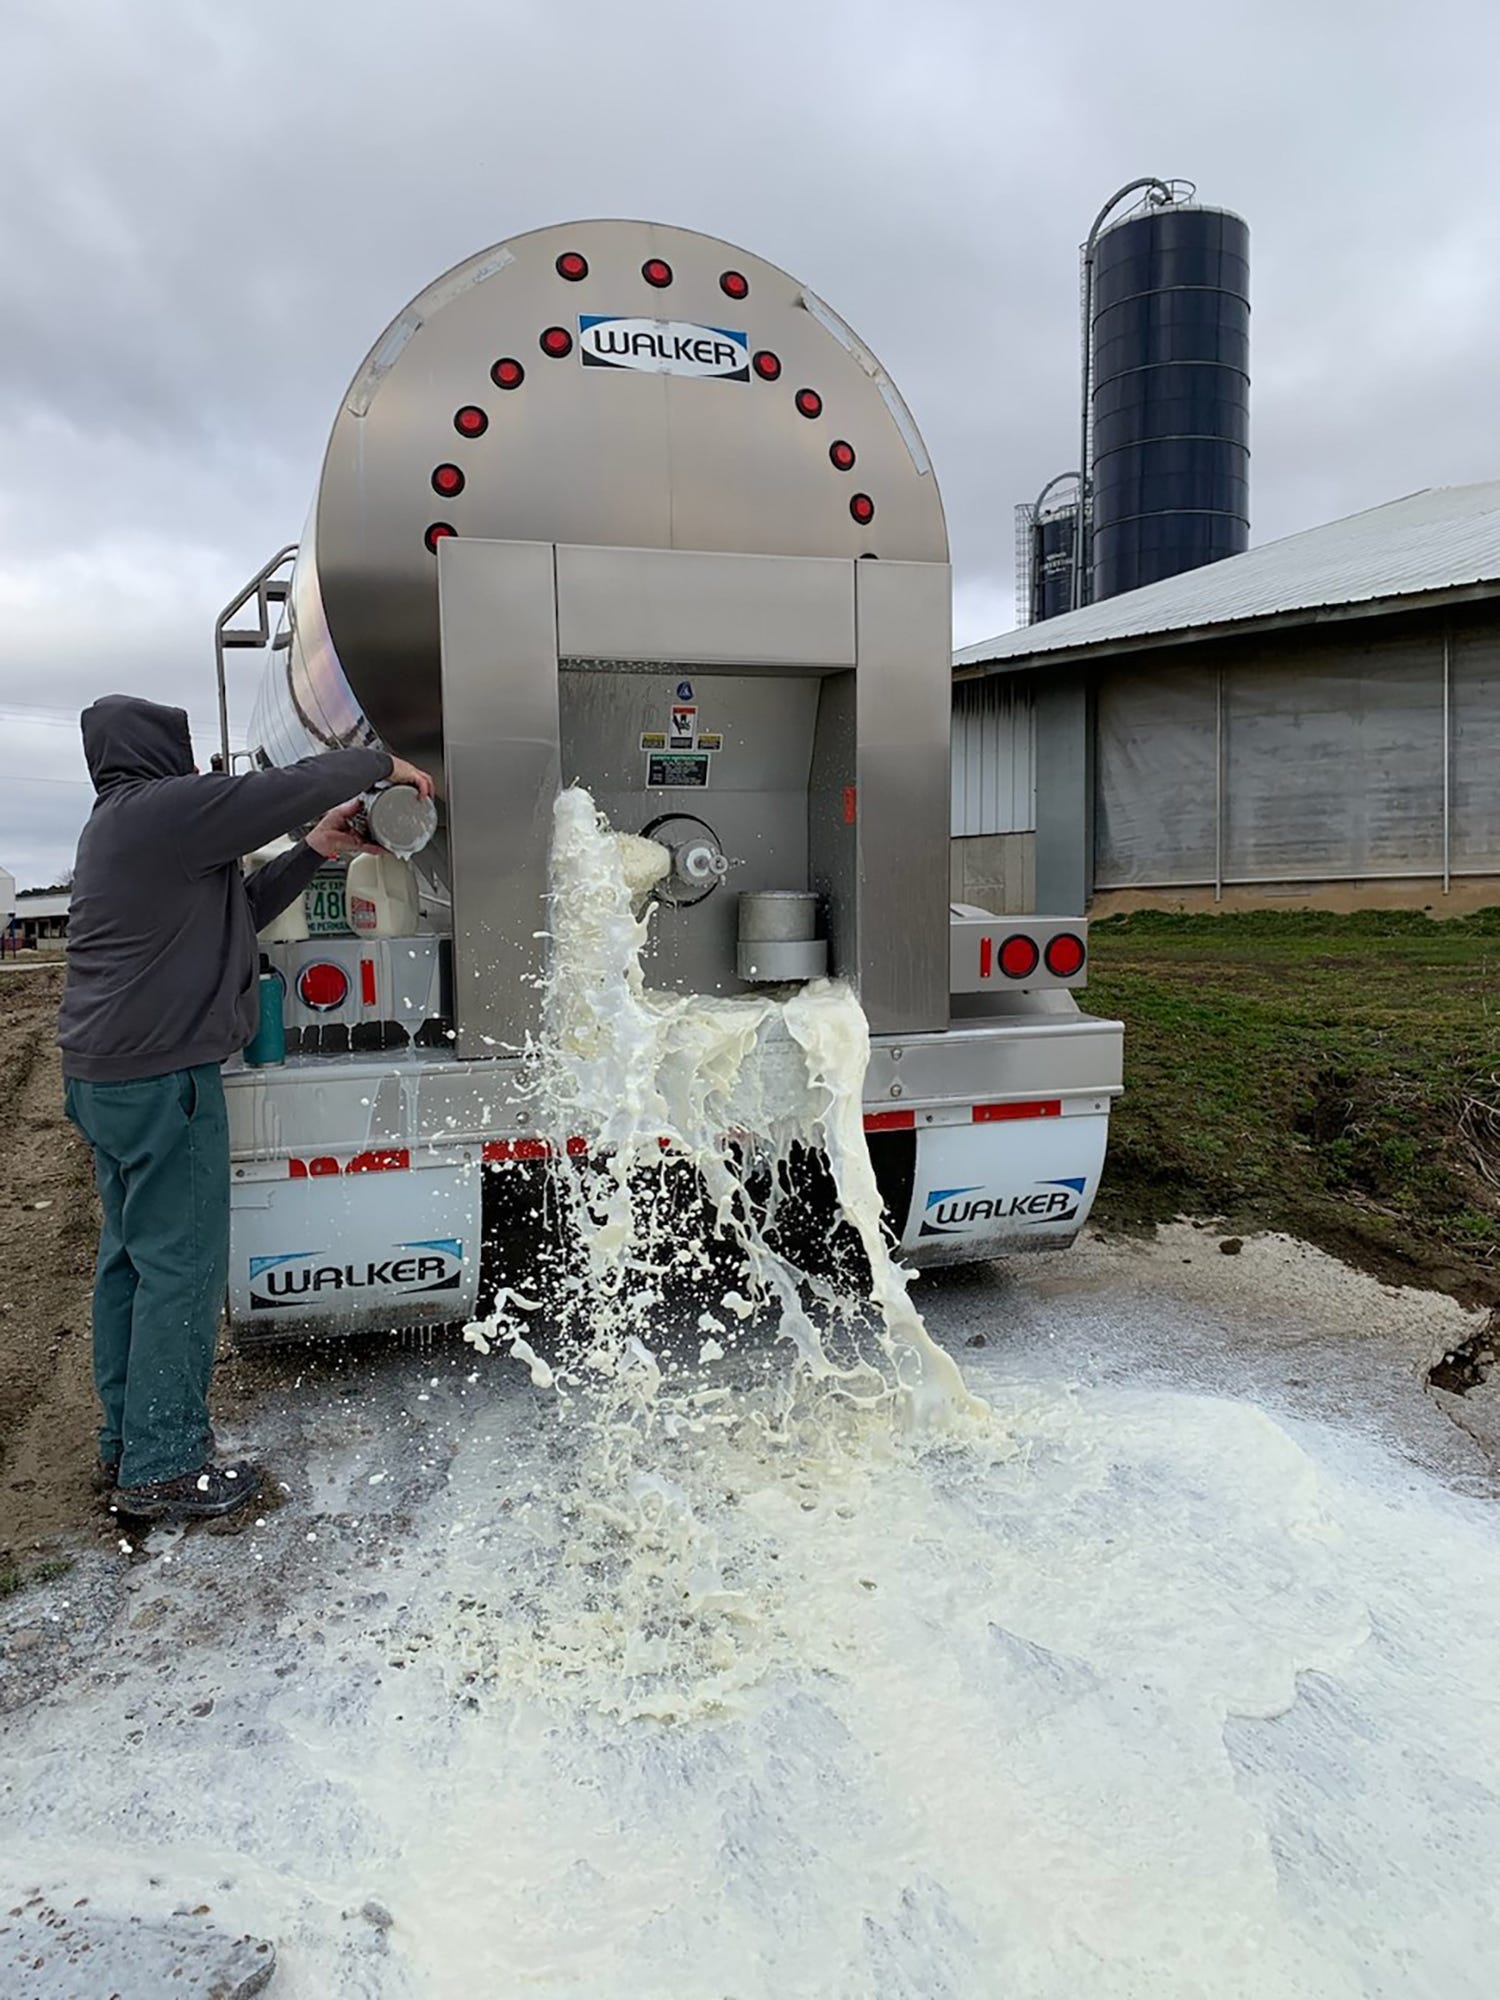 Truck dumping milk onto ground. ©USA Today